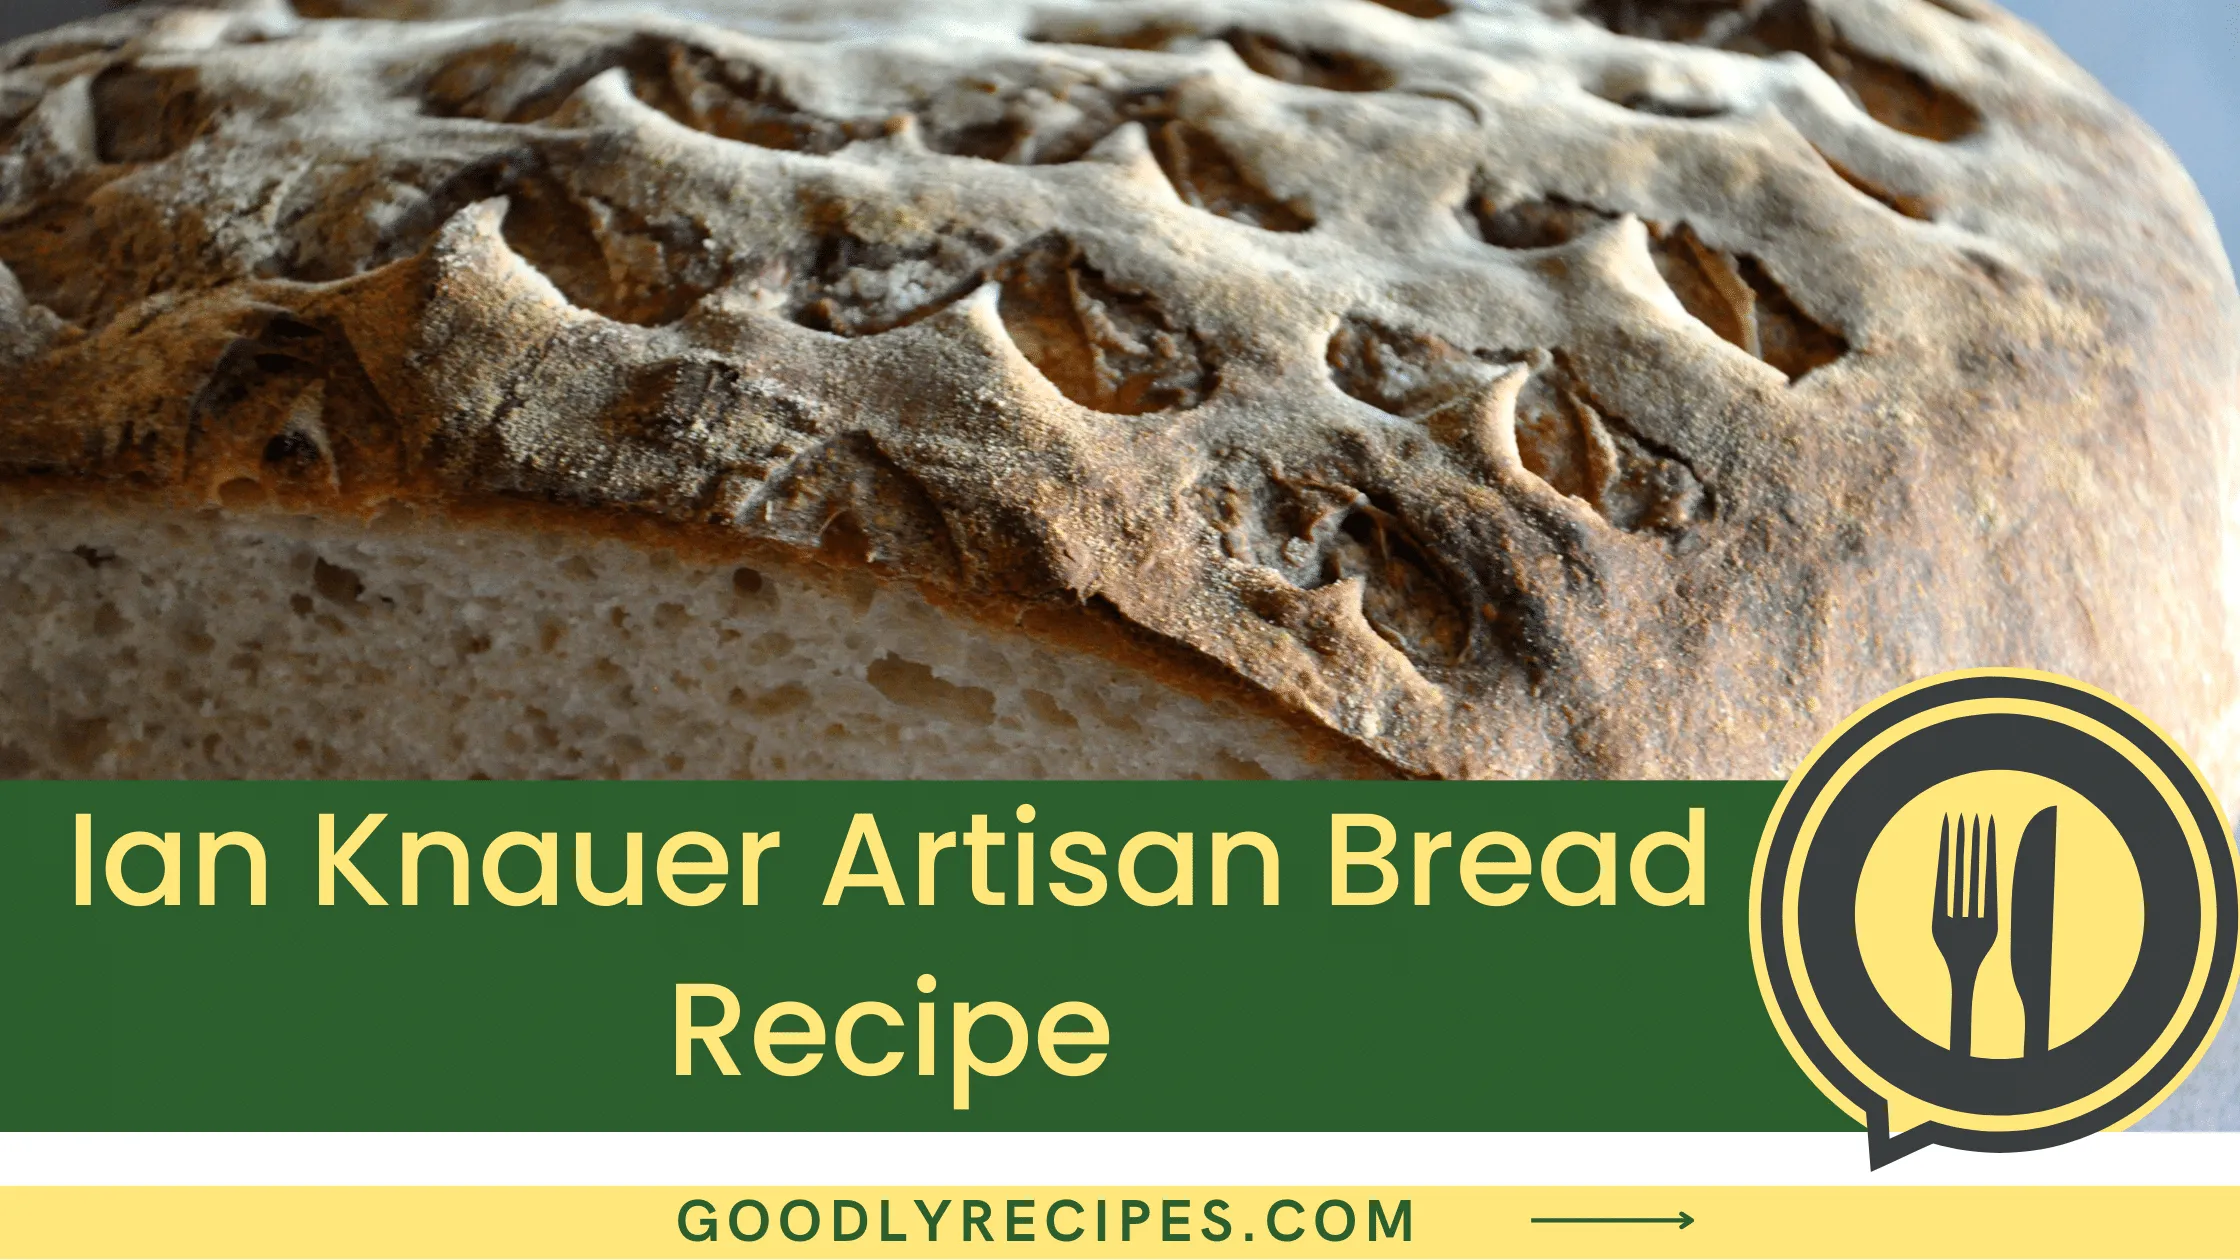 What Is Ian Knauer Artisan Bread?